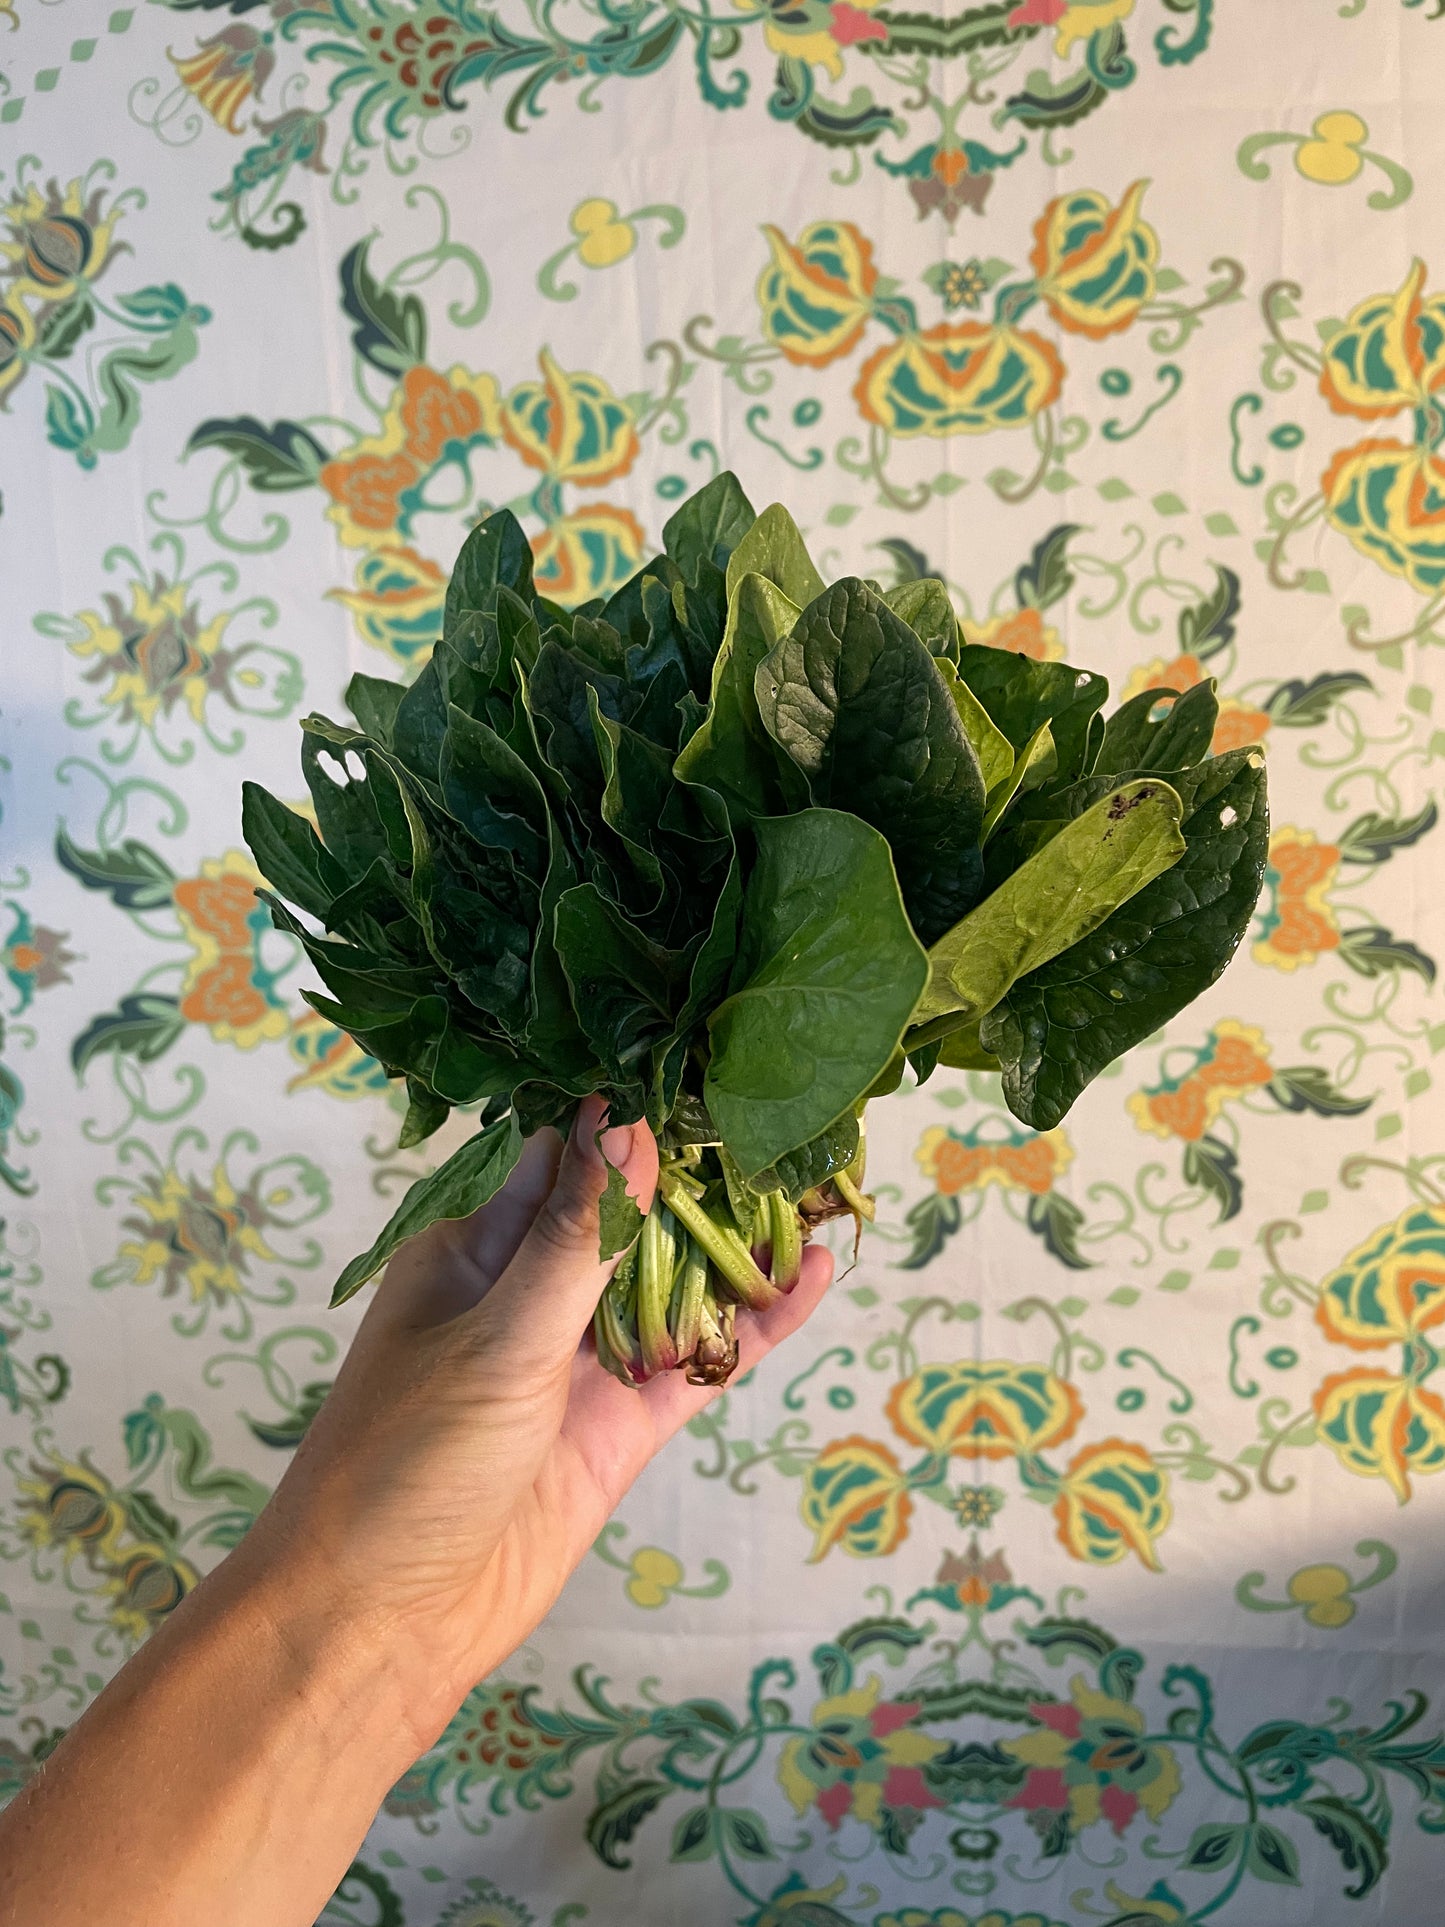 Organic spinach bunch